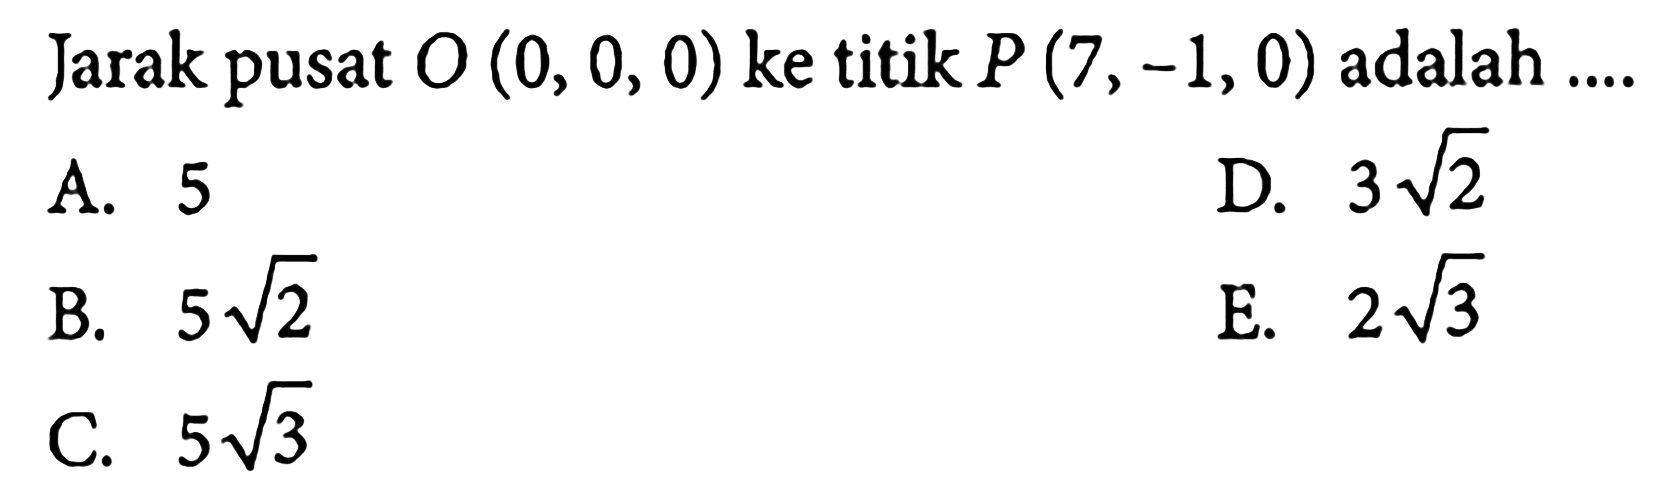 Jarak pusat O(0, 0, 0) ke titik P(7, -1, 0) adalah....